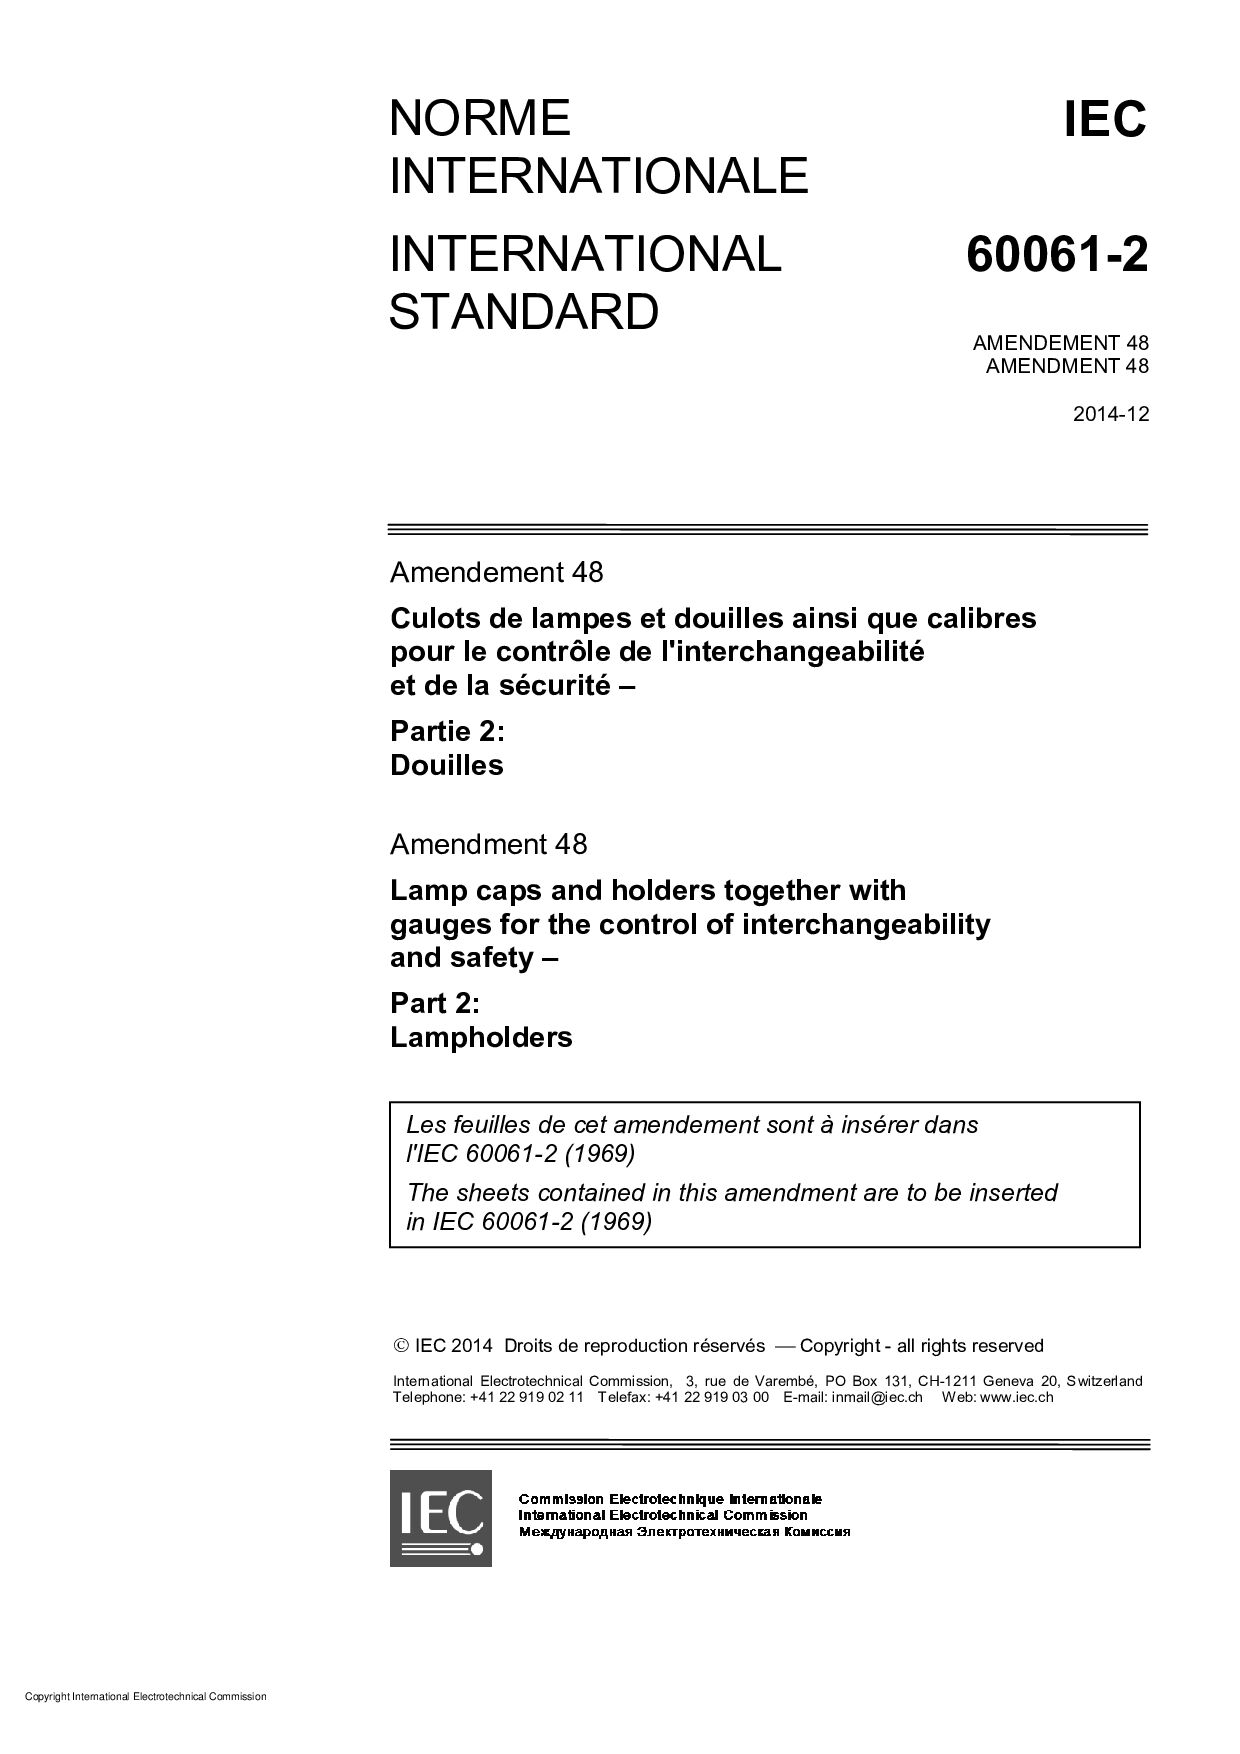 IEC 60061-2:1969/AMD48:2014封面图